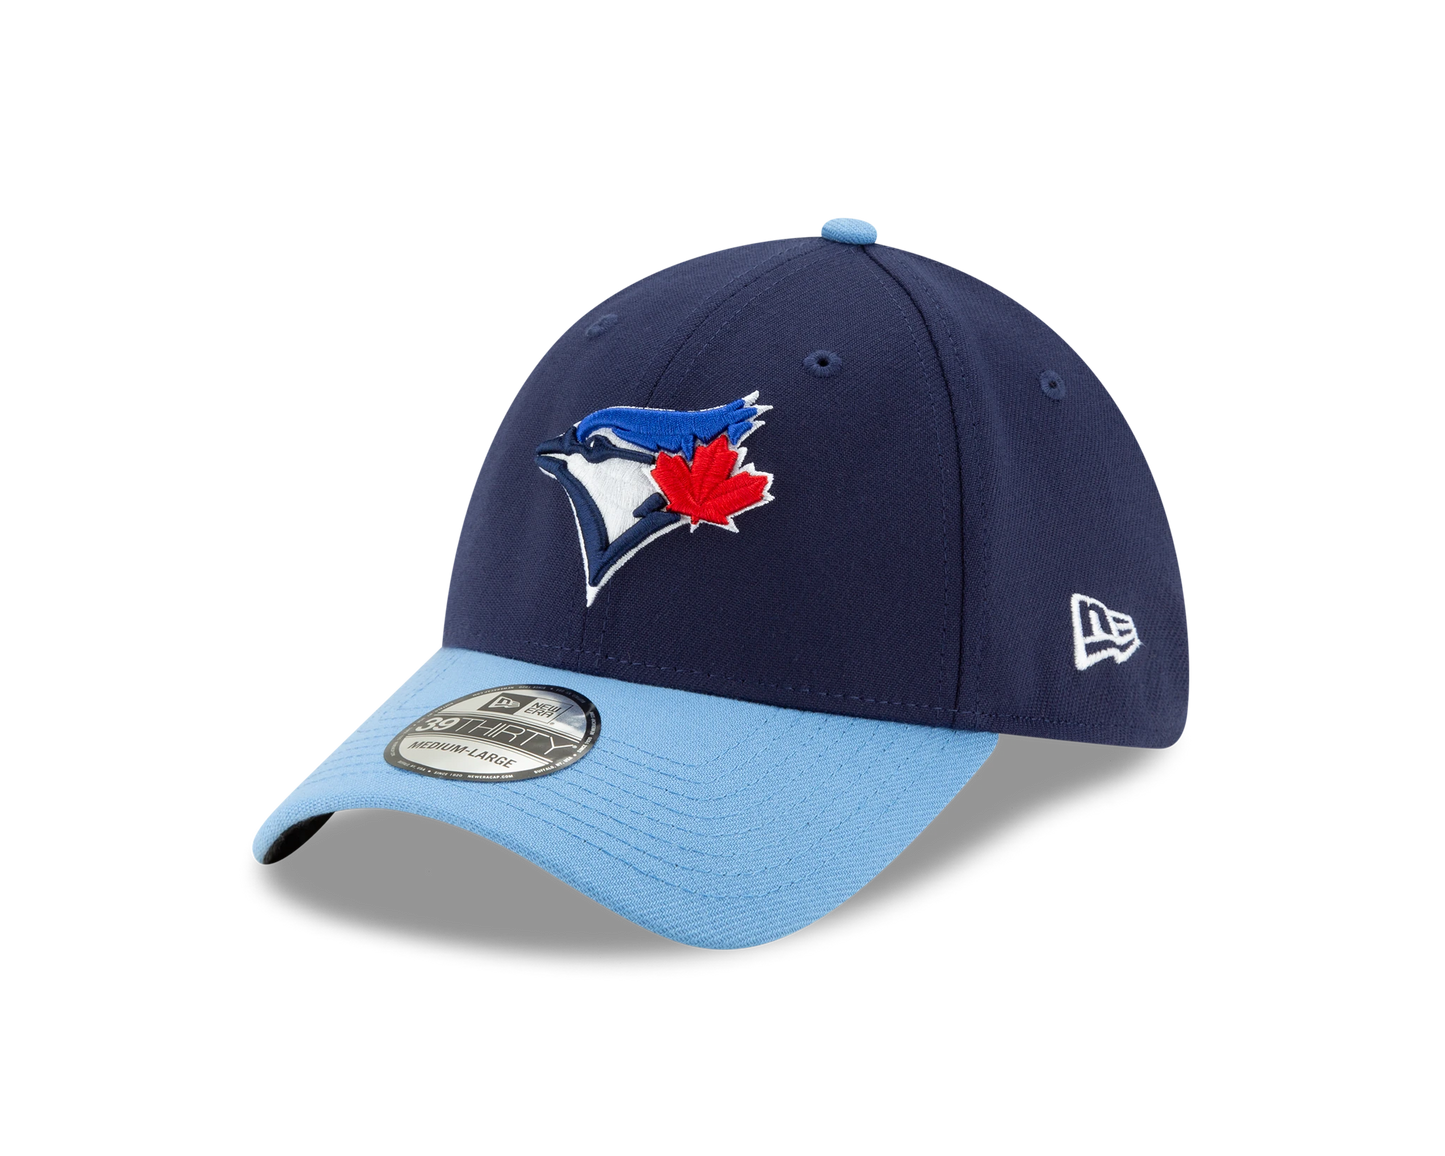 MLB Toddler/Child Hat 3930 Team Classic Alt4 Blue Jays